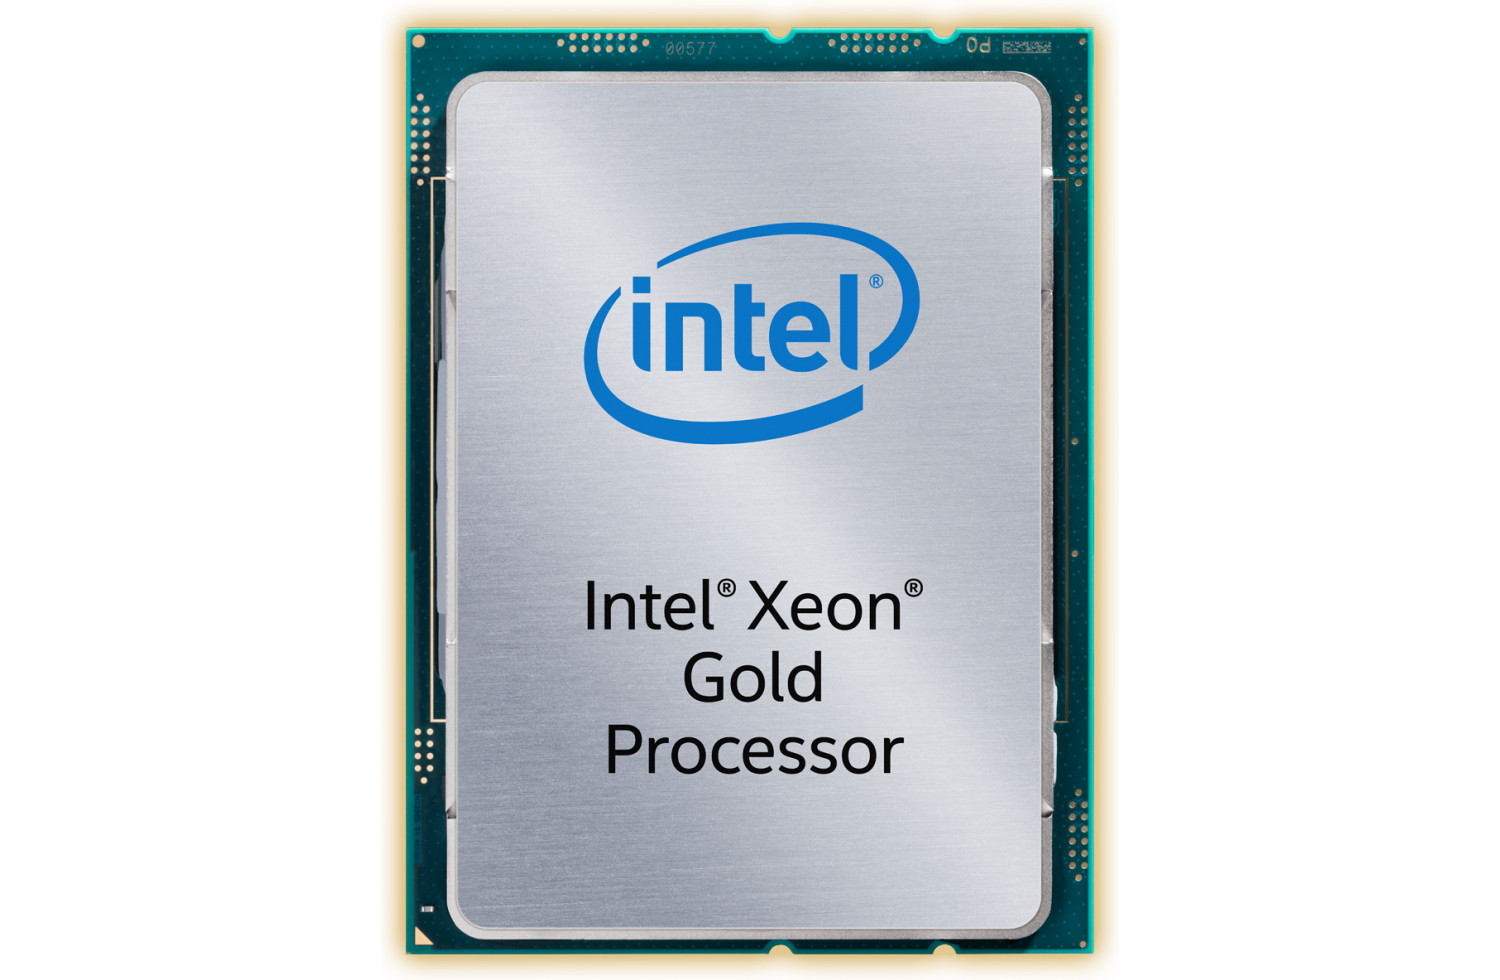 Xeon r gold. Intel Xeon Silver 4110. Intel Xeon Gold 6230. Intel Xeon Gold 5115. Intel Xeon Silver 4214.